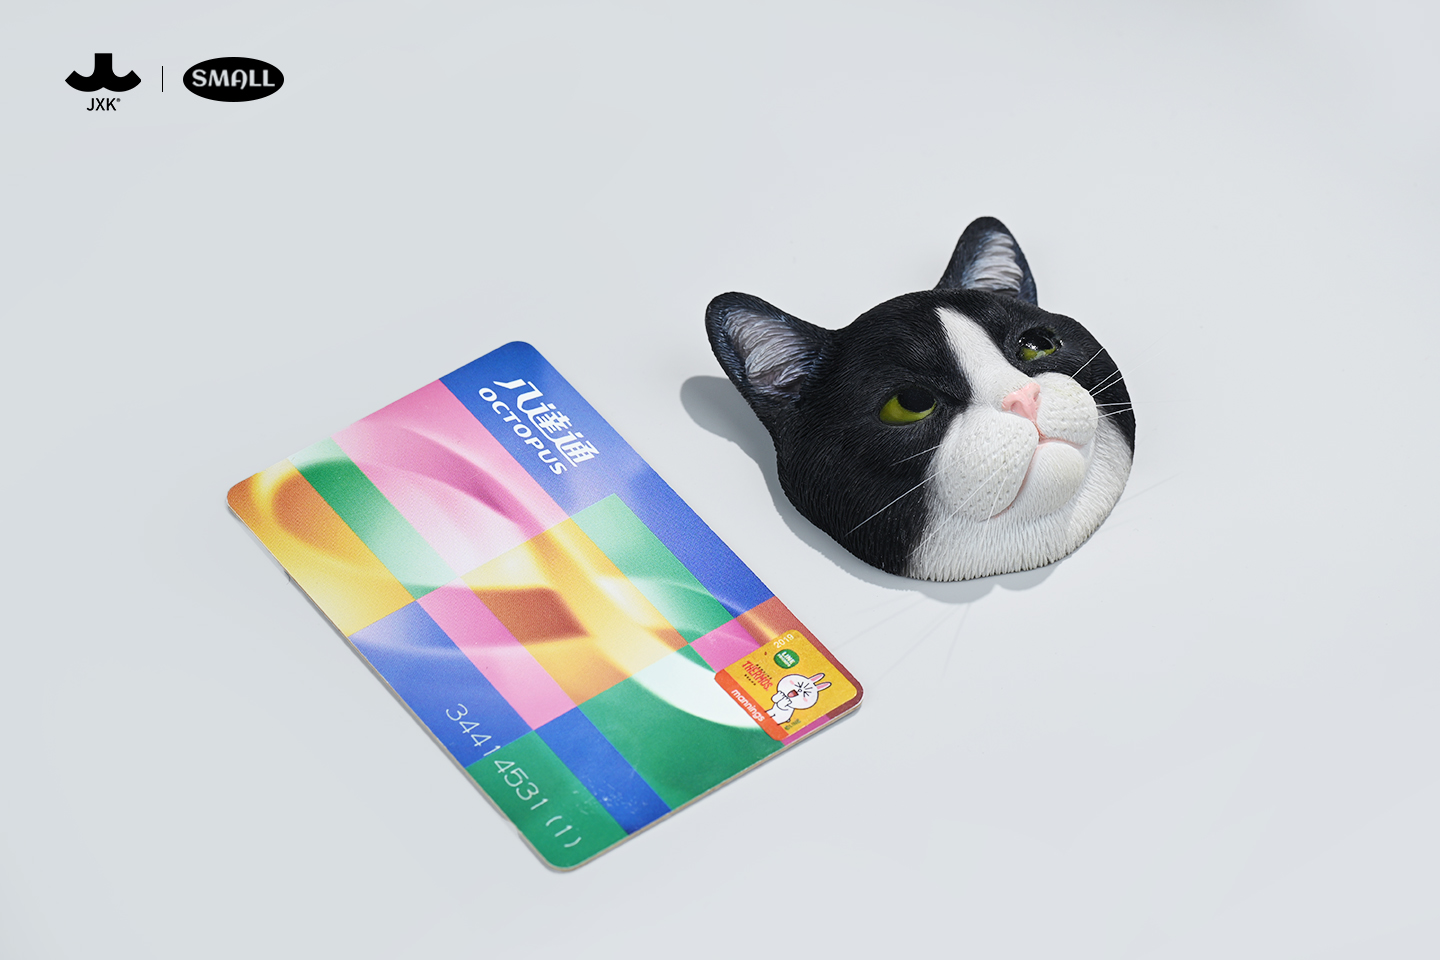 【Bang】现货 JXK SMALL 大头猫冰箱贴 潮流周边动物模型摆件礼物 - 图1